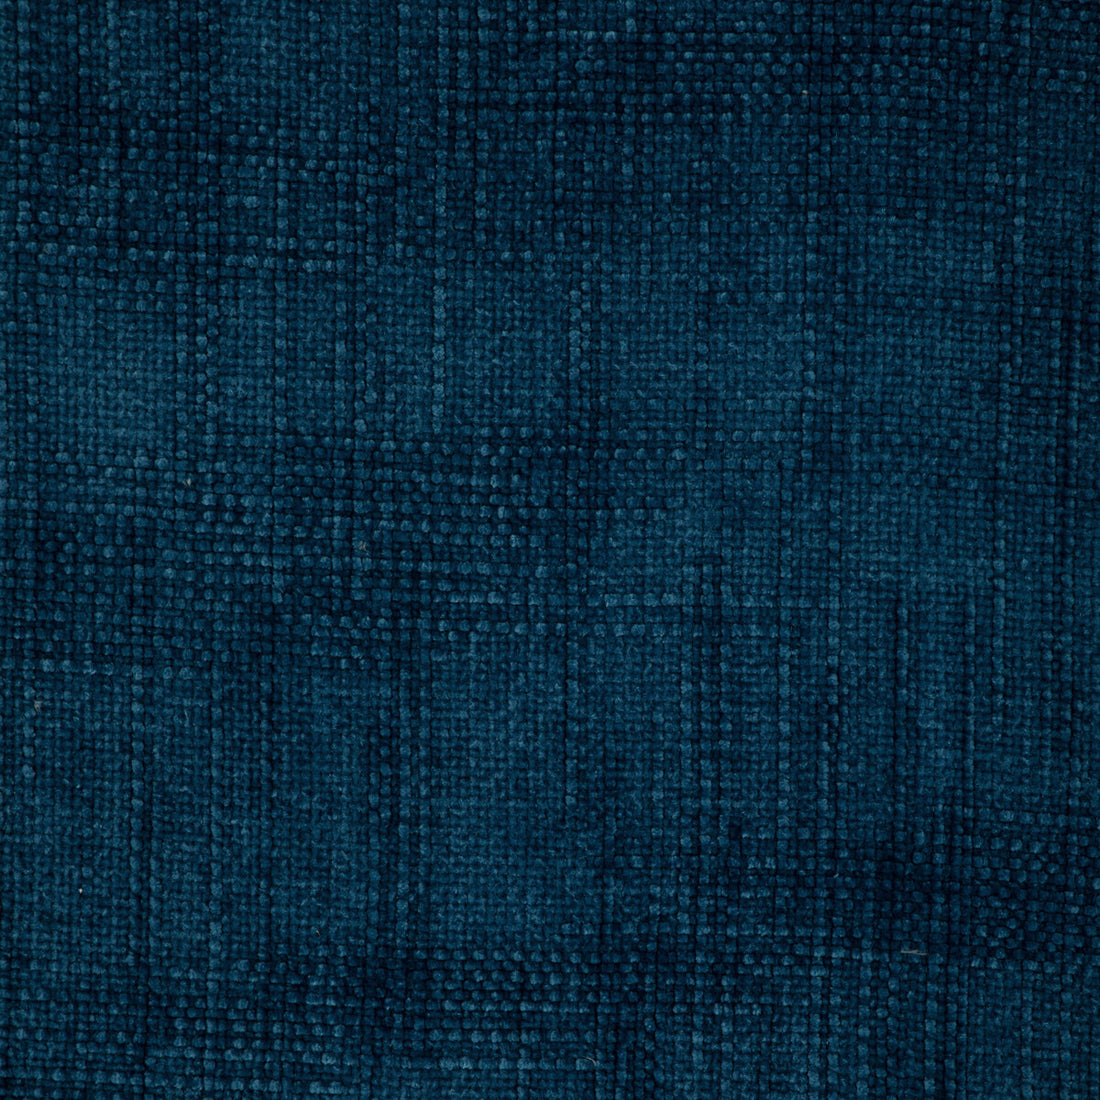 Kravet Smart fabric in 36991-5 color - pattern 36991.5.0 - by Kravet Smart in the Performance Kravetarmor collection